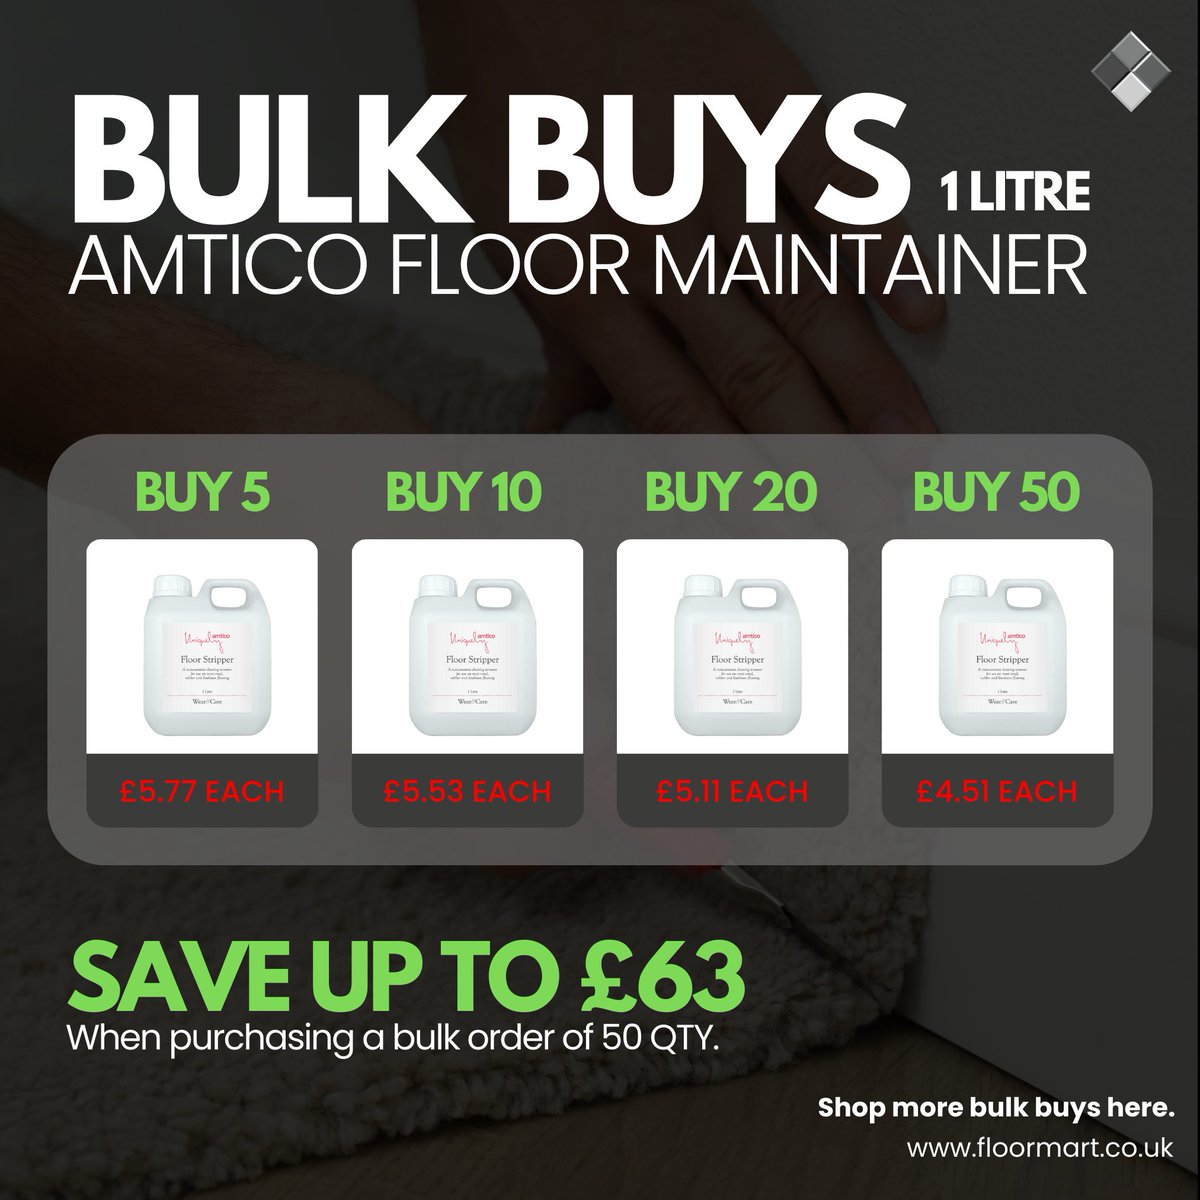 BULK BUY ALERT 🚨

Amtico Floor Maintainer - Quantities 5, 10, 20, 50 ✅

Save up to £63.

SHOP HERE 👉🏼 floormart.co.uk/amtico-interna…

#bulkbuy #floormart #floorcleaner #amticomaintainer